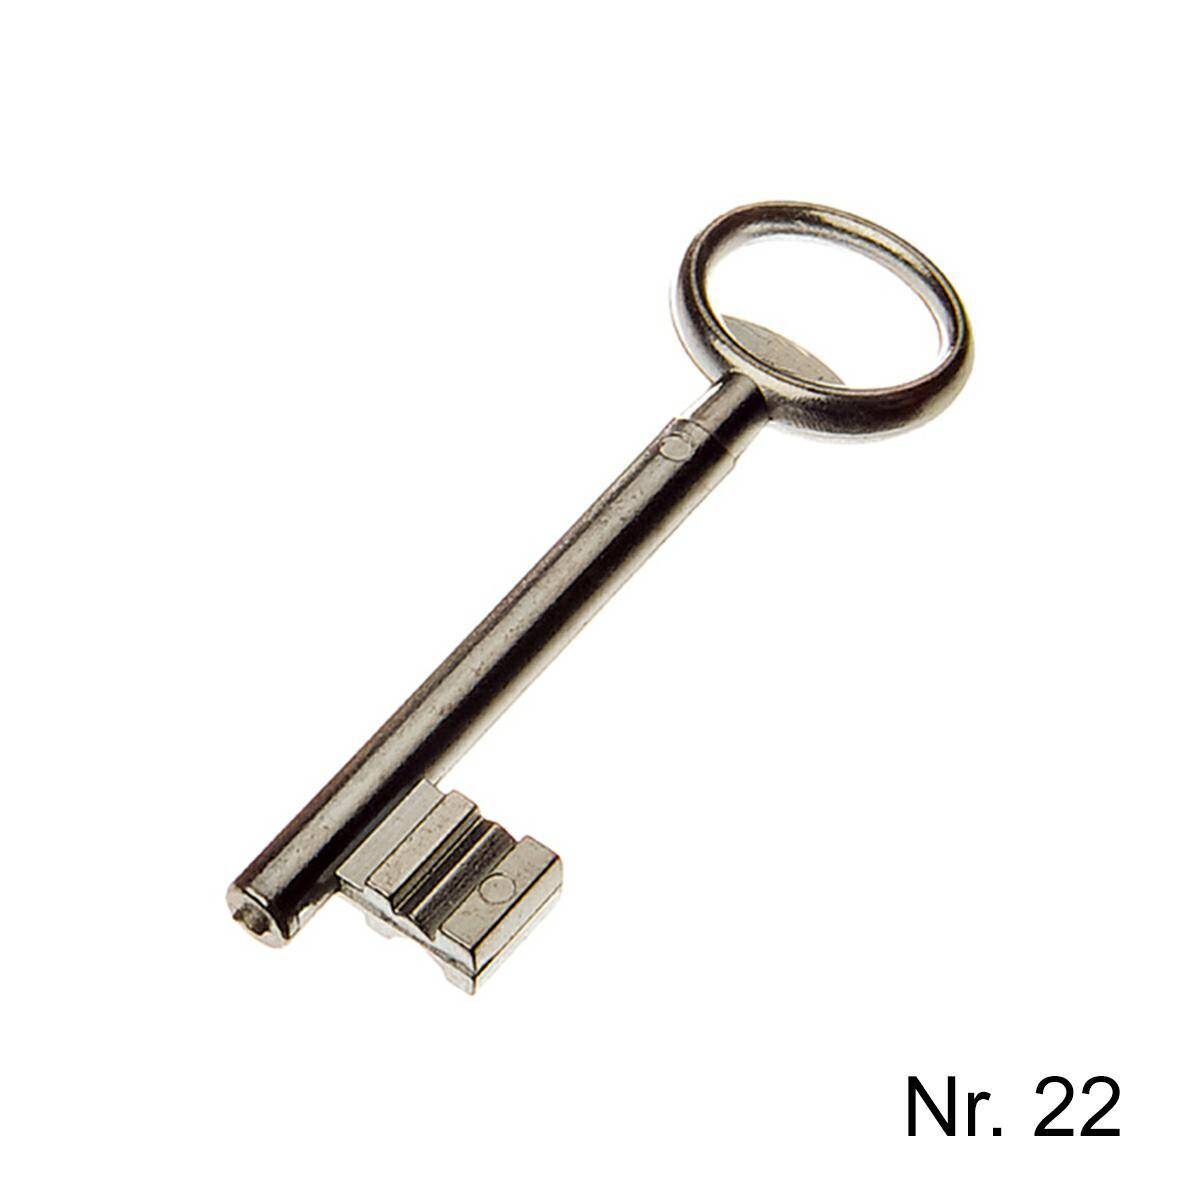 Cast key Jania for the lock - No. 22